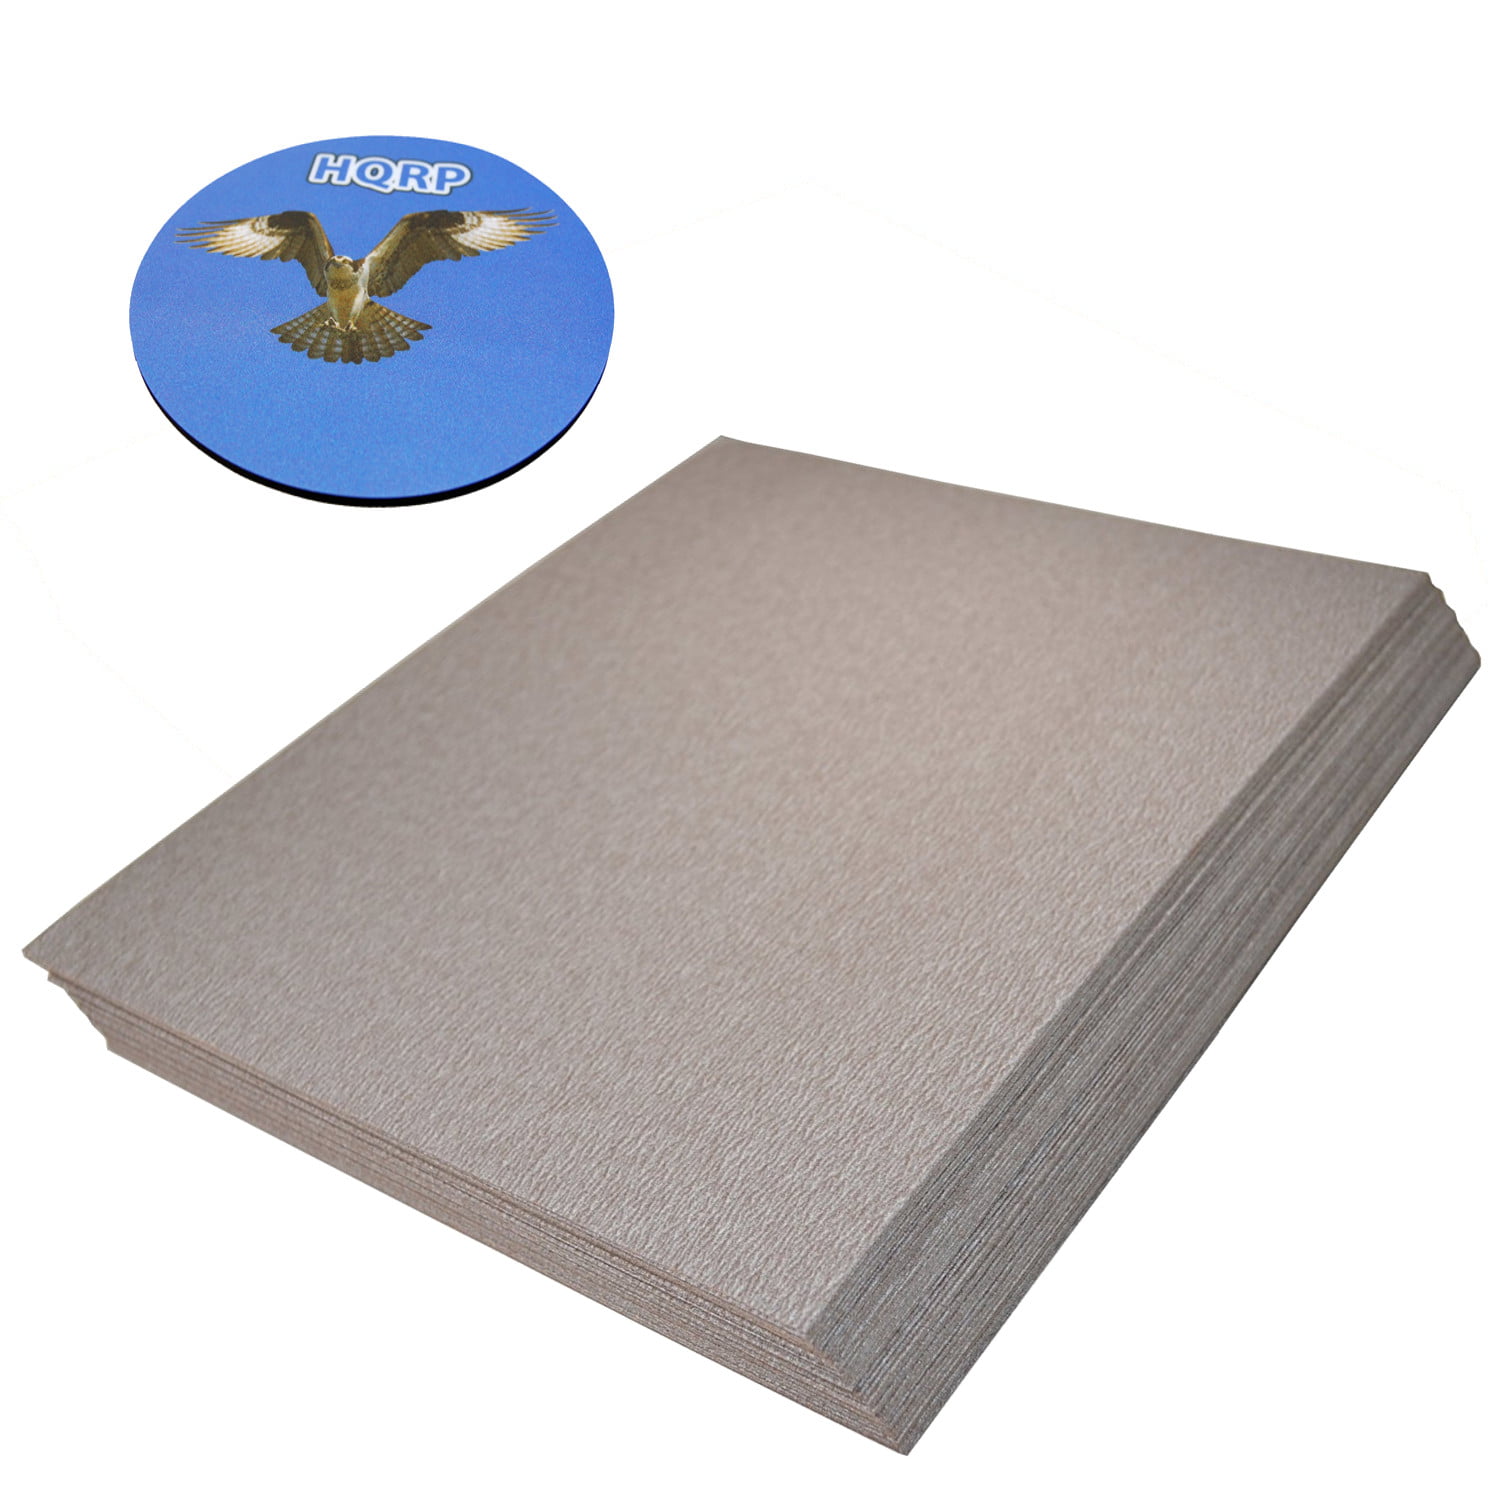 HQRP 9" x 11" Aluminum Oxide Sandpaper 80 100 120 150 220 Grit 50 Pack 